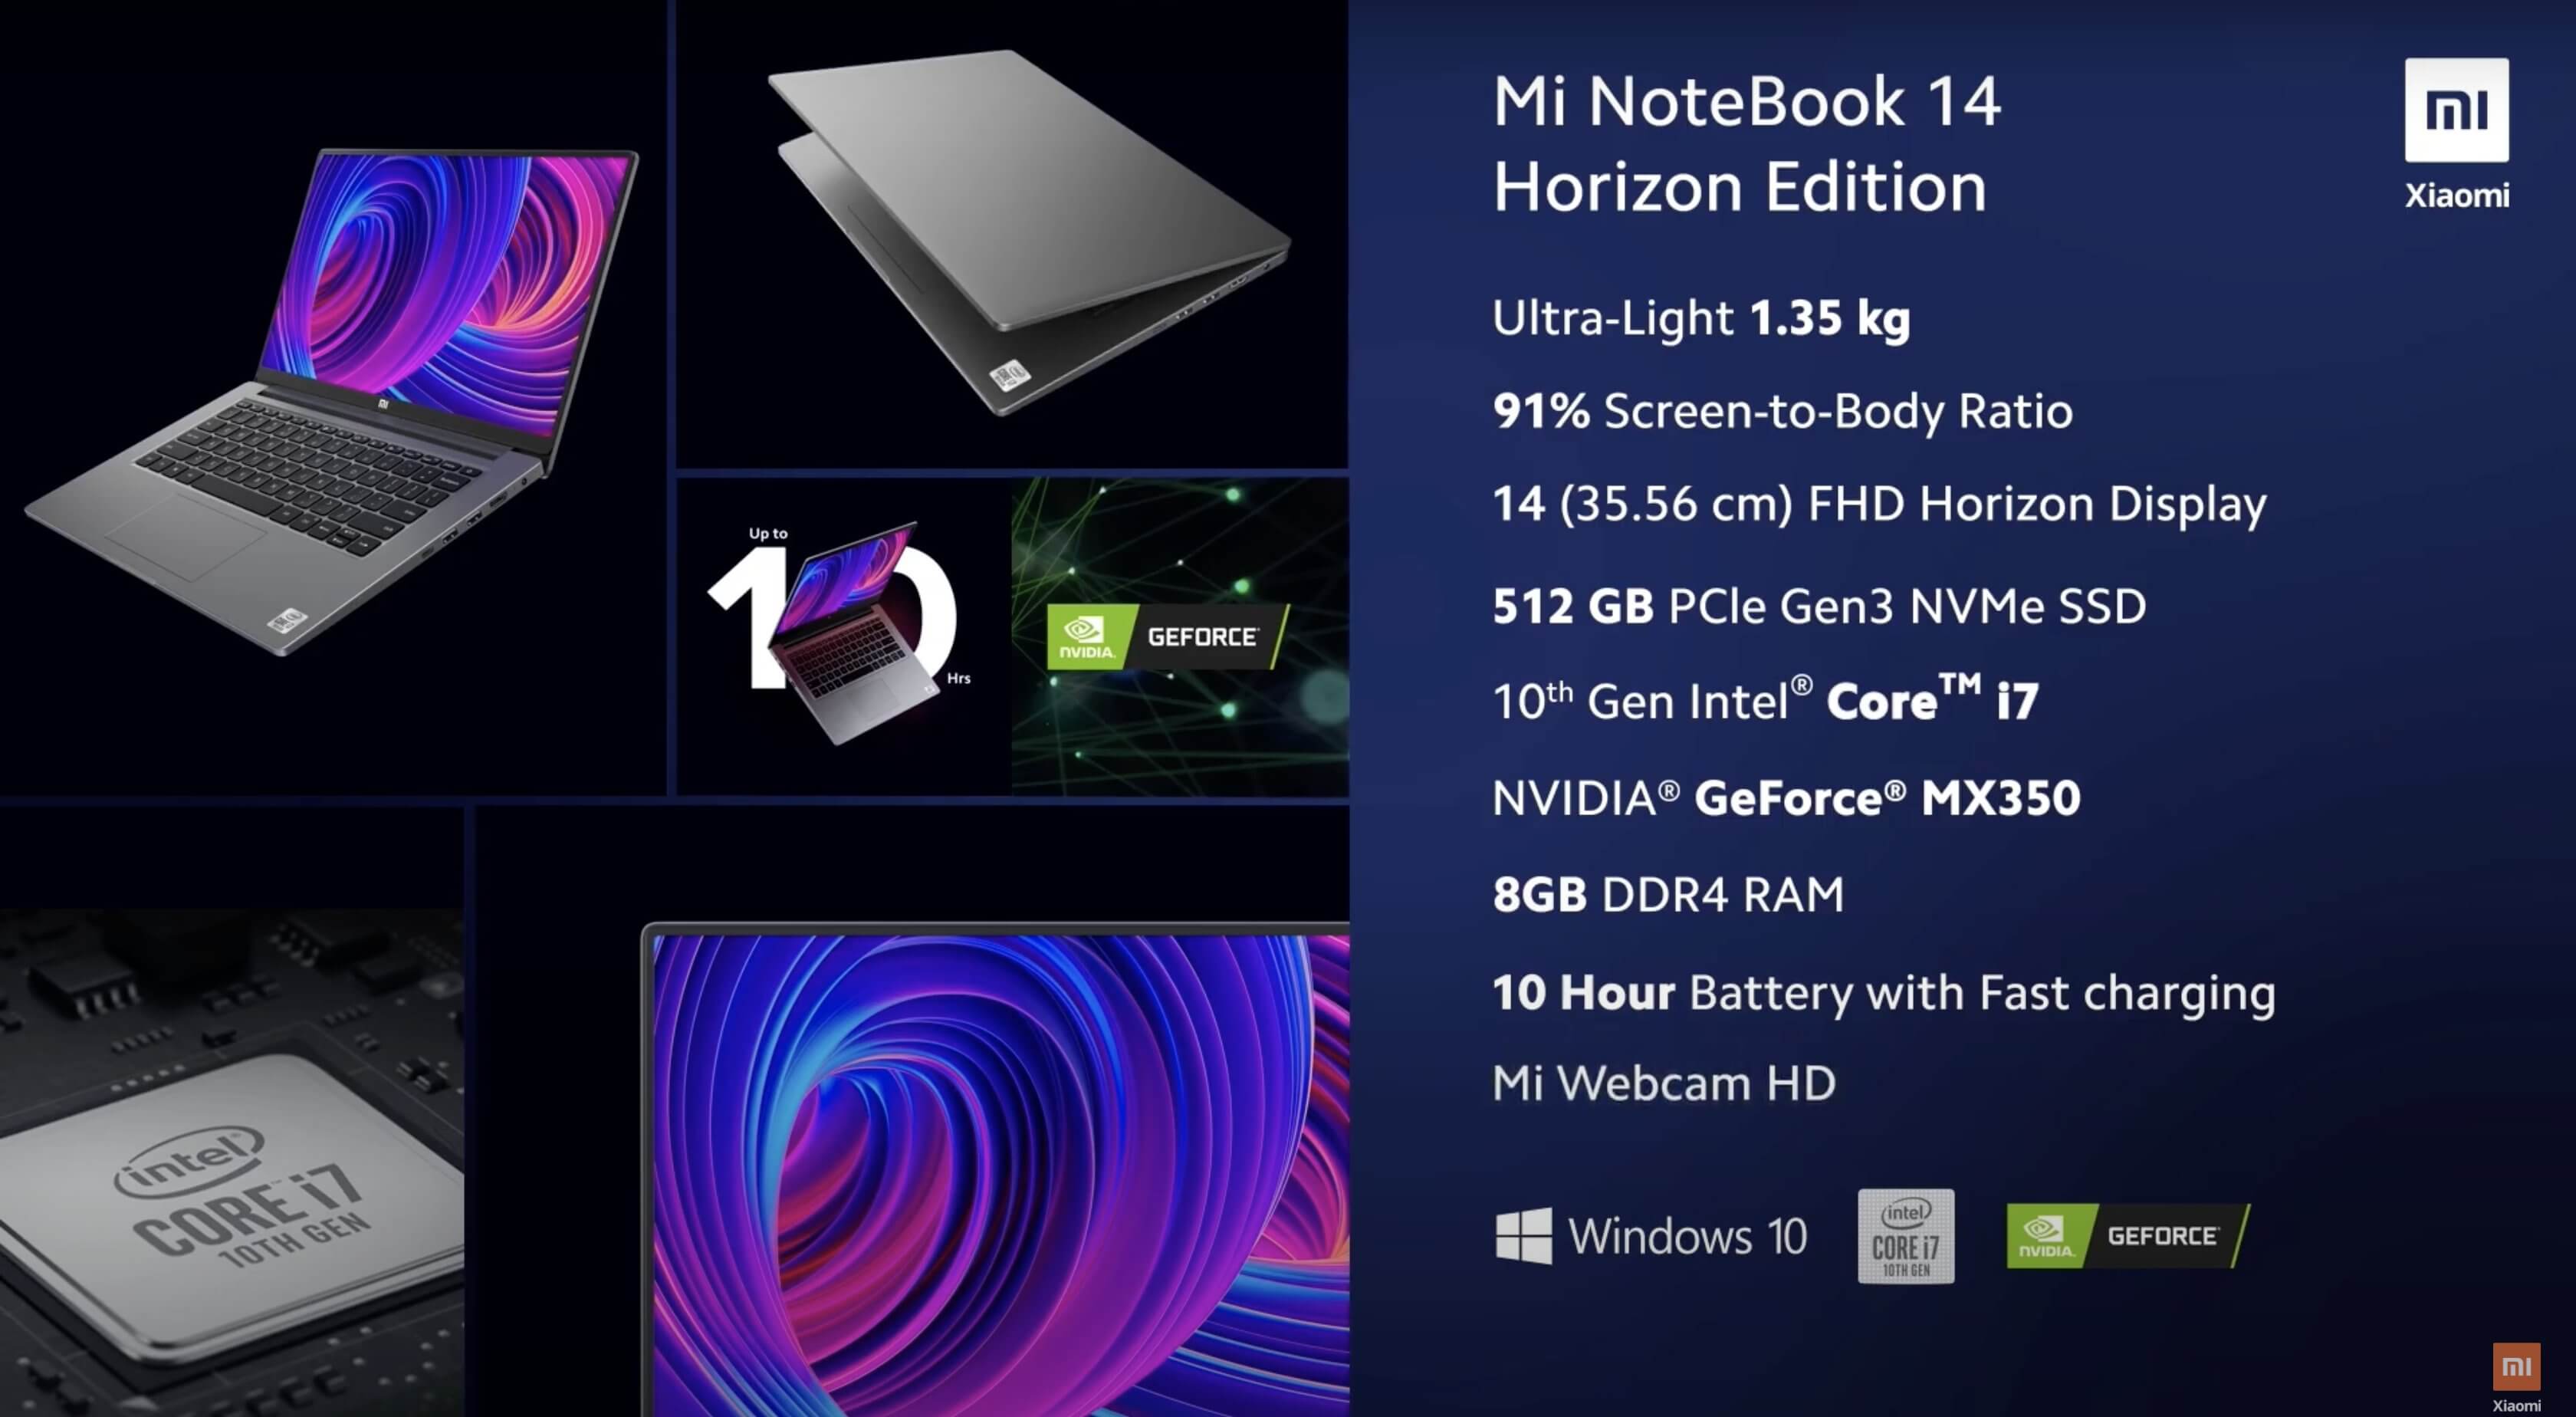 Mi NoteBook 14 Horizon Edition